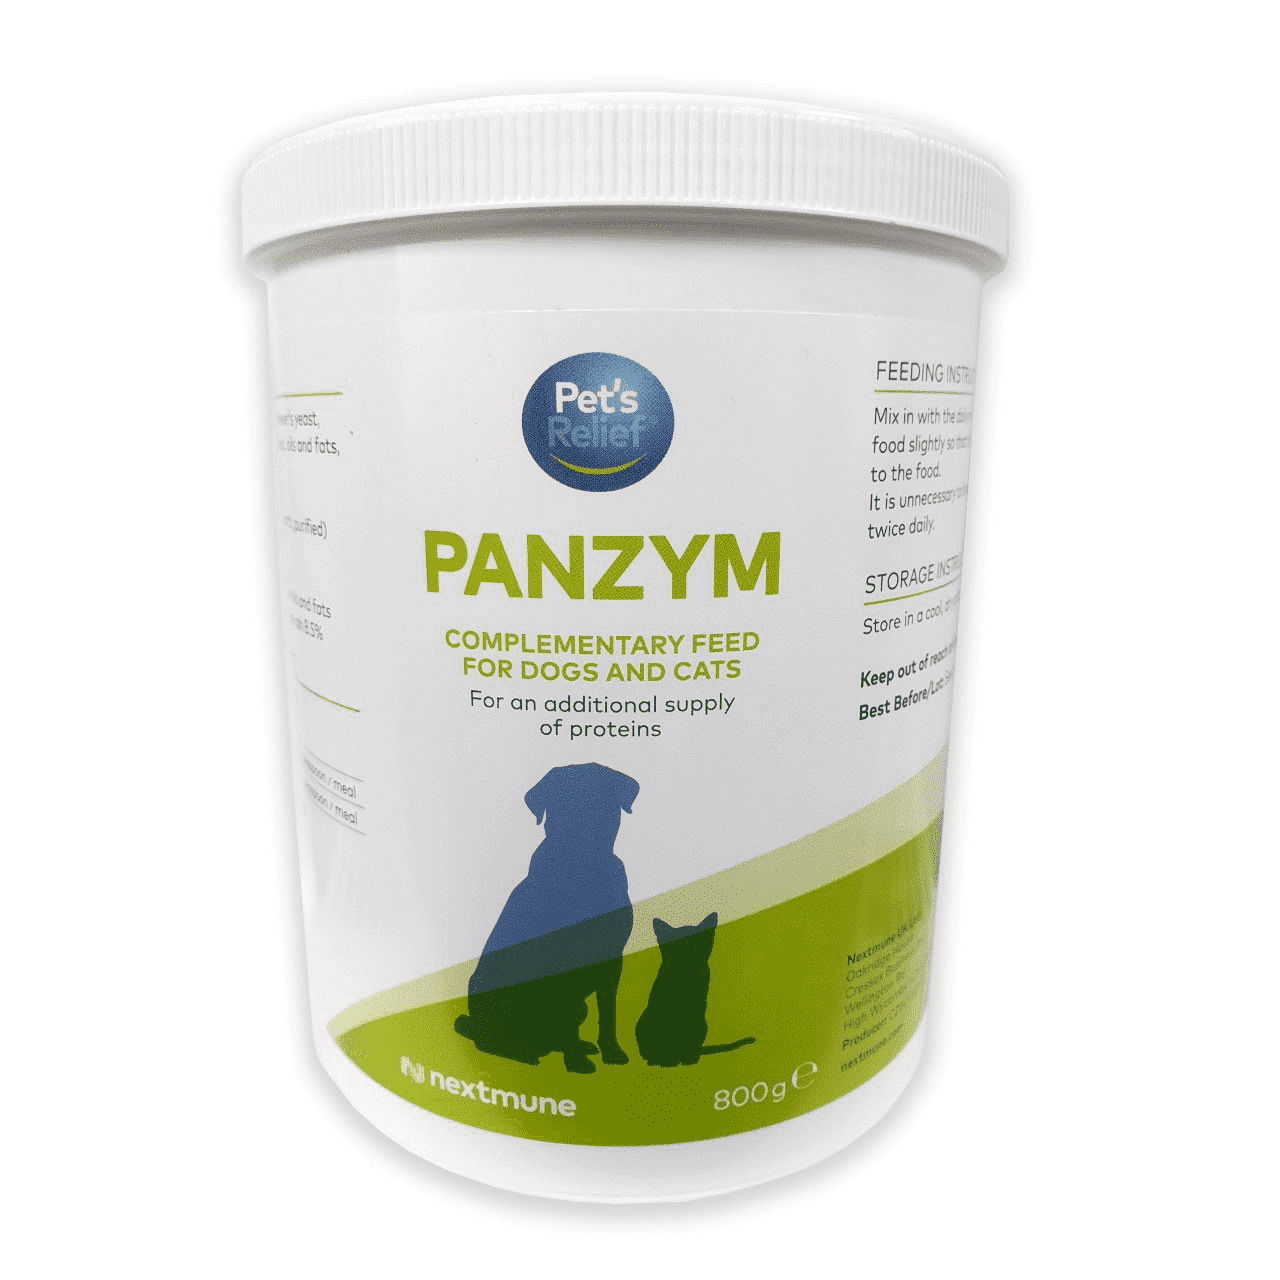 Panzym Pancreatic Digestive Supplement Powder